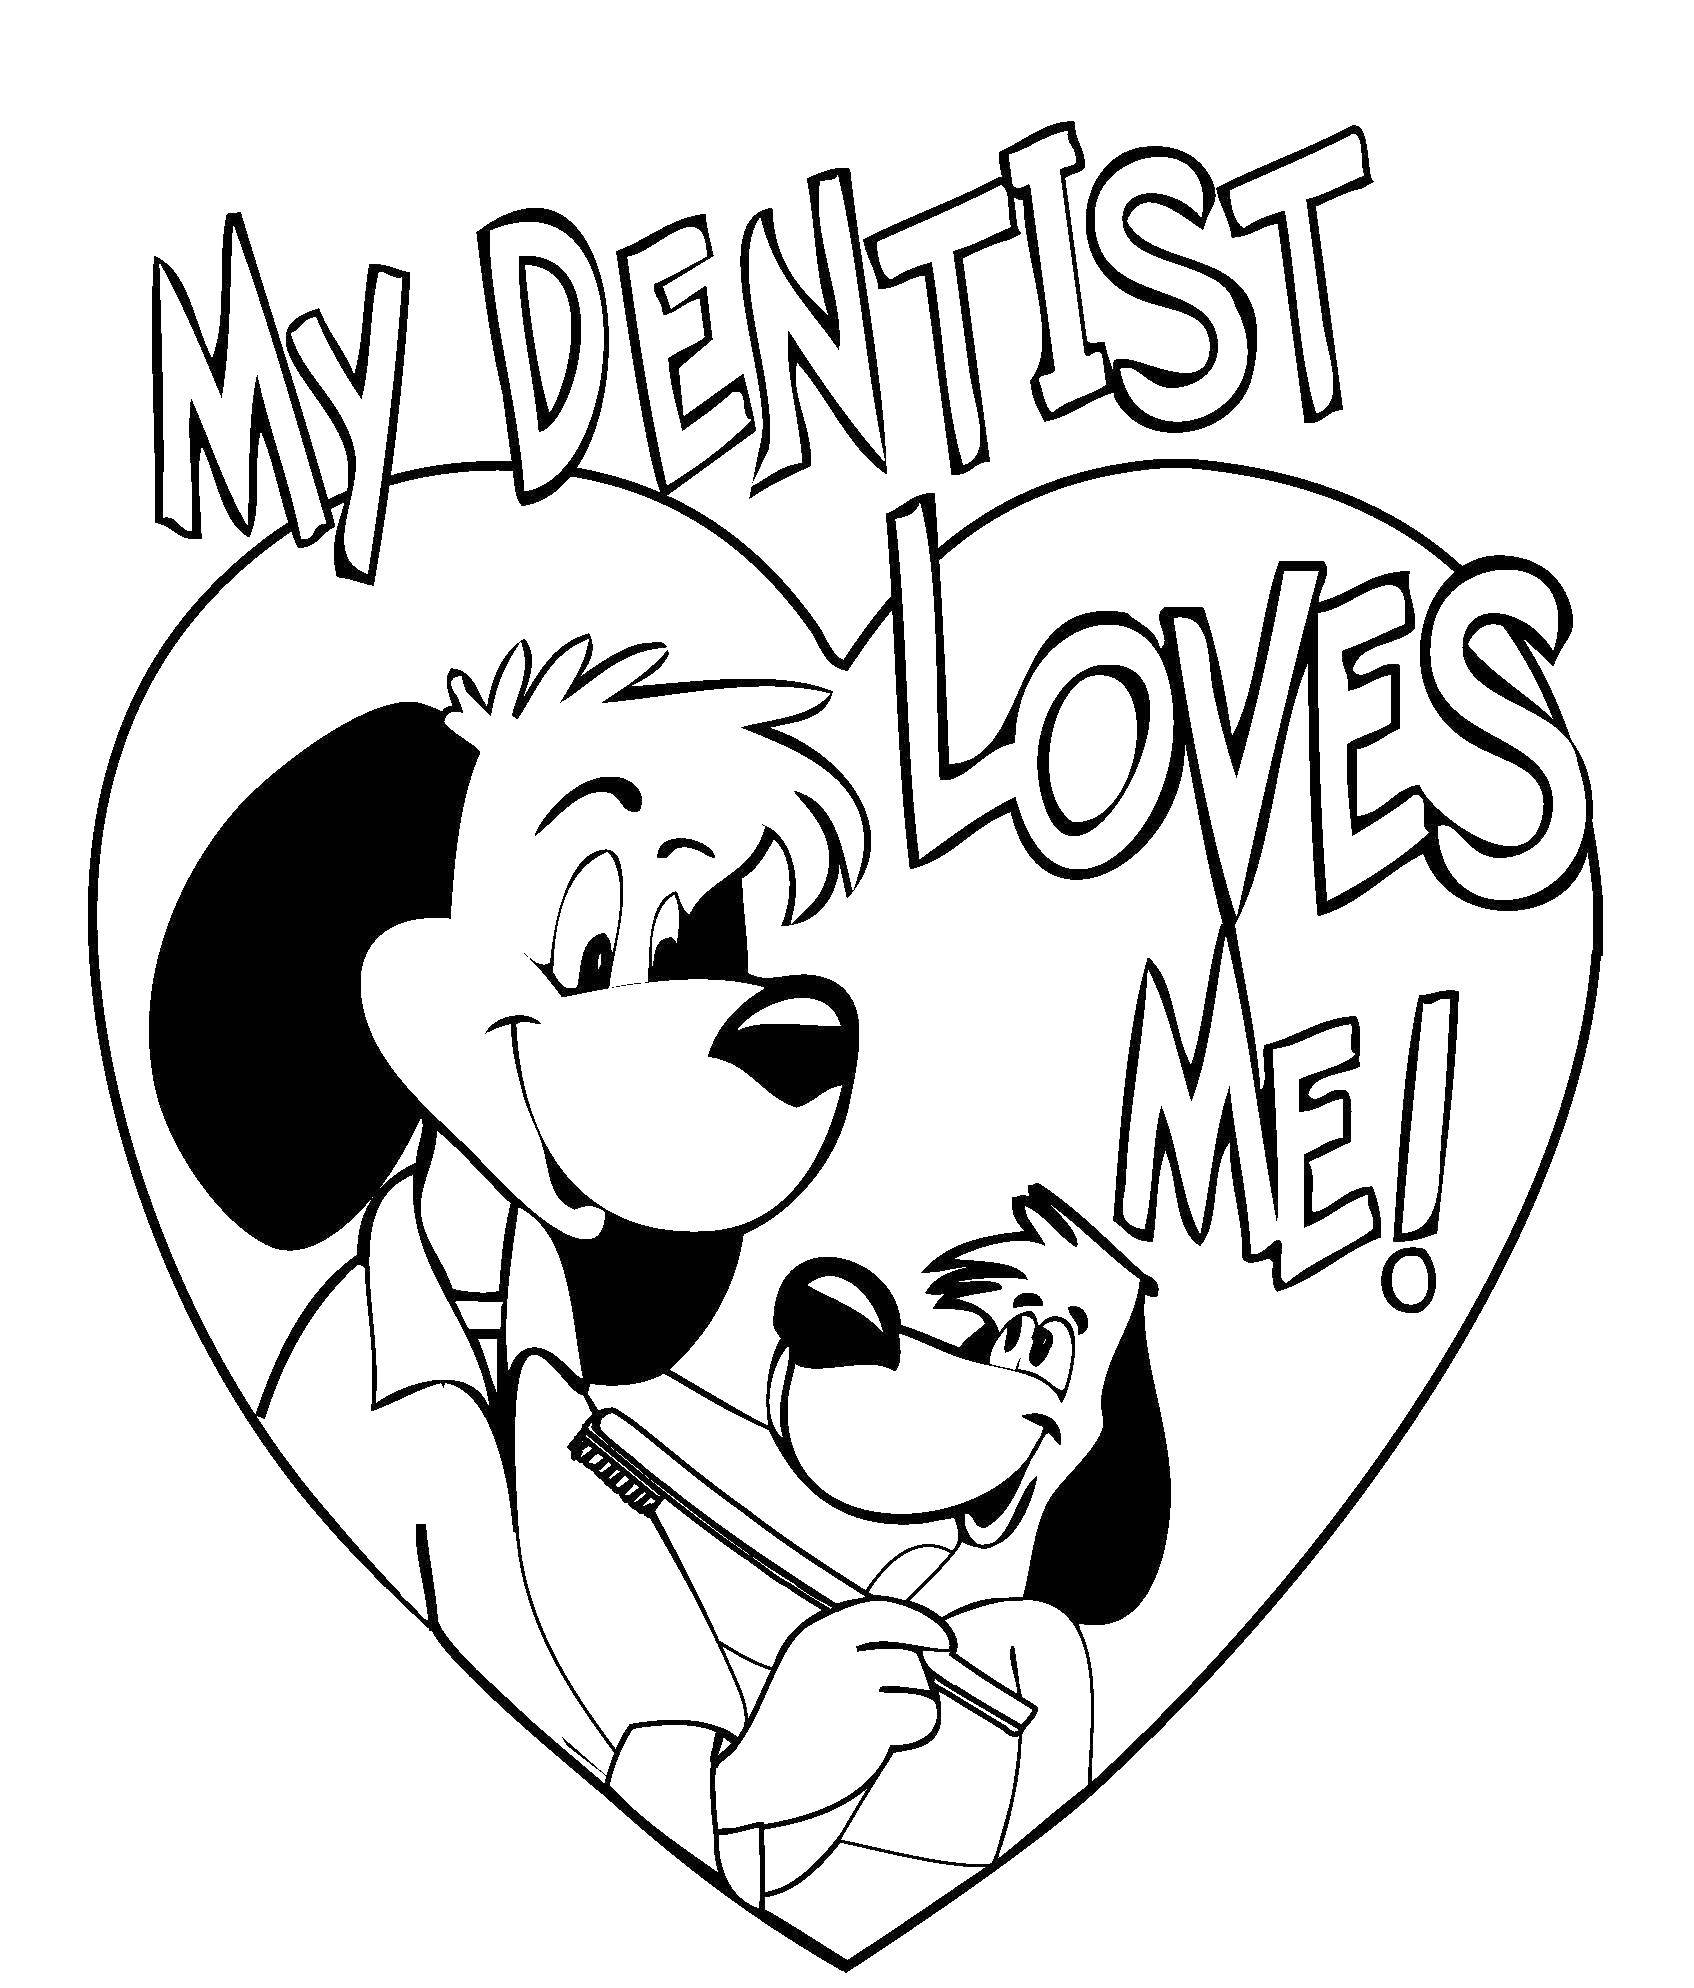 Название: Раскраска Мой стоматолог любит меня. Категория: Уход за зубами. Теги: Уход за зубами.